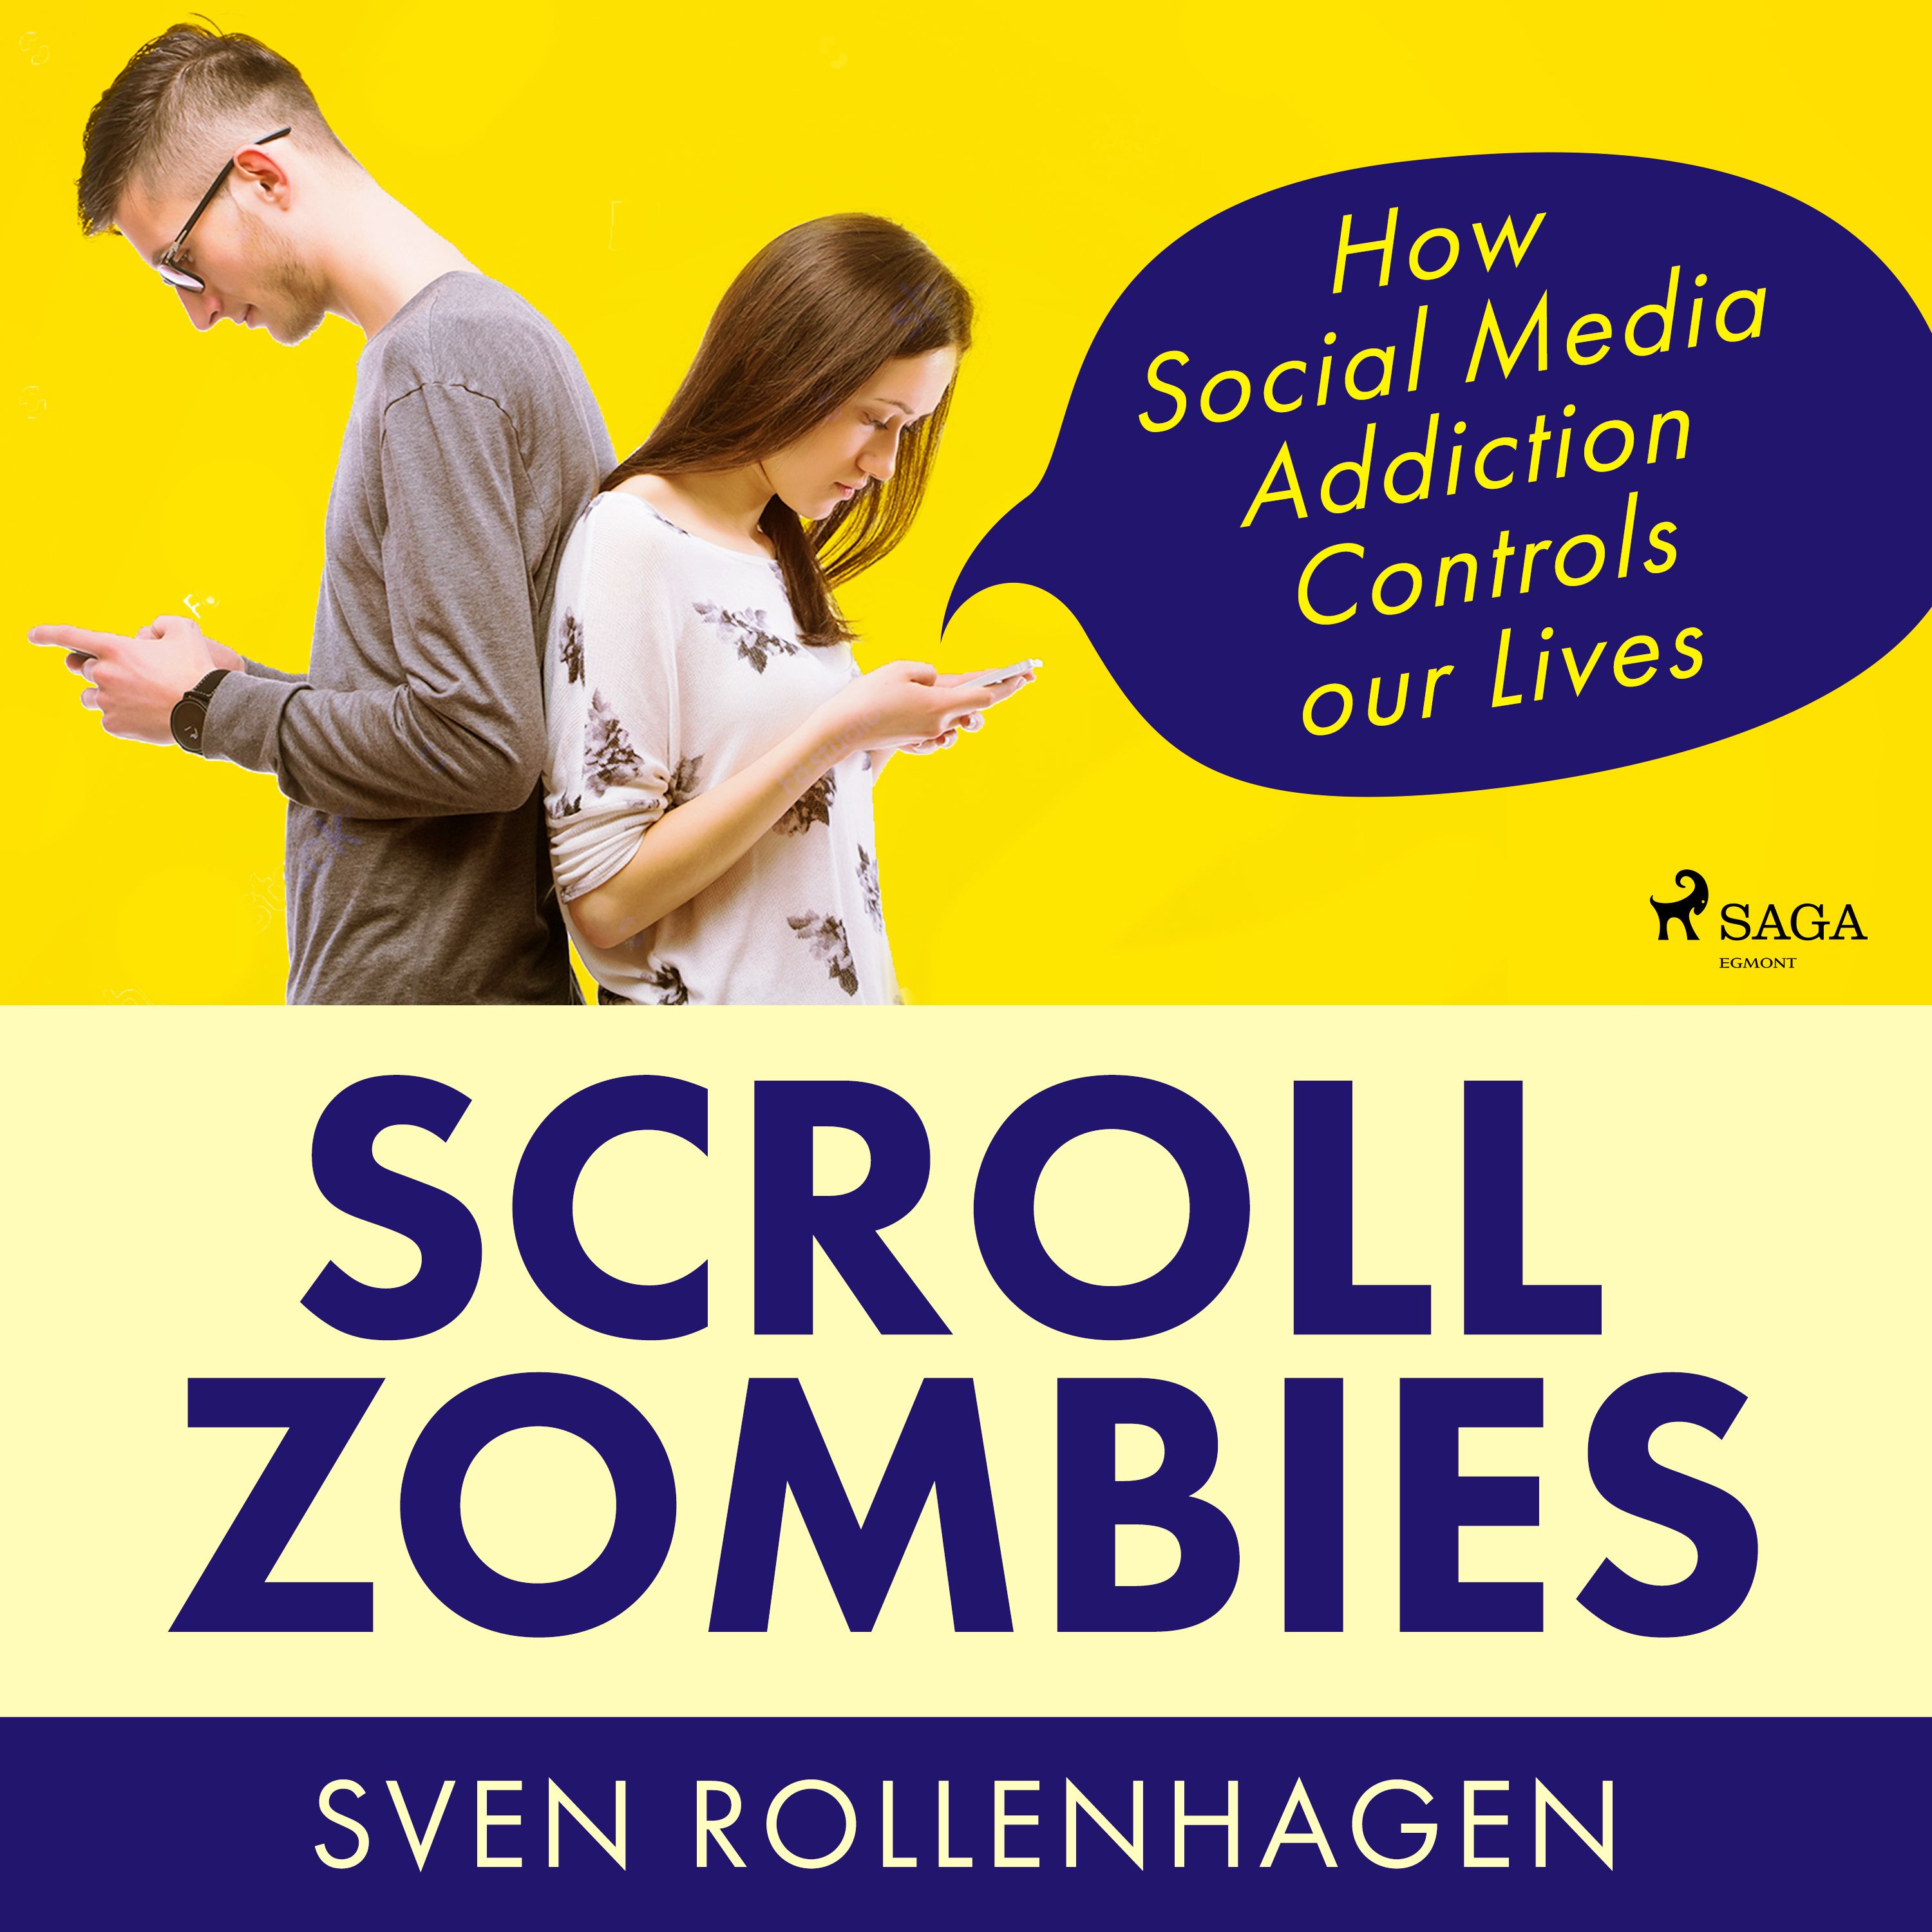 Scroll Zombies: How Social Media Addiction Controls our Lives, lydbog af Sven Rollenhagen